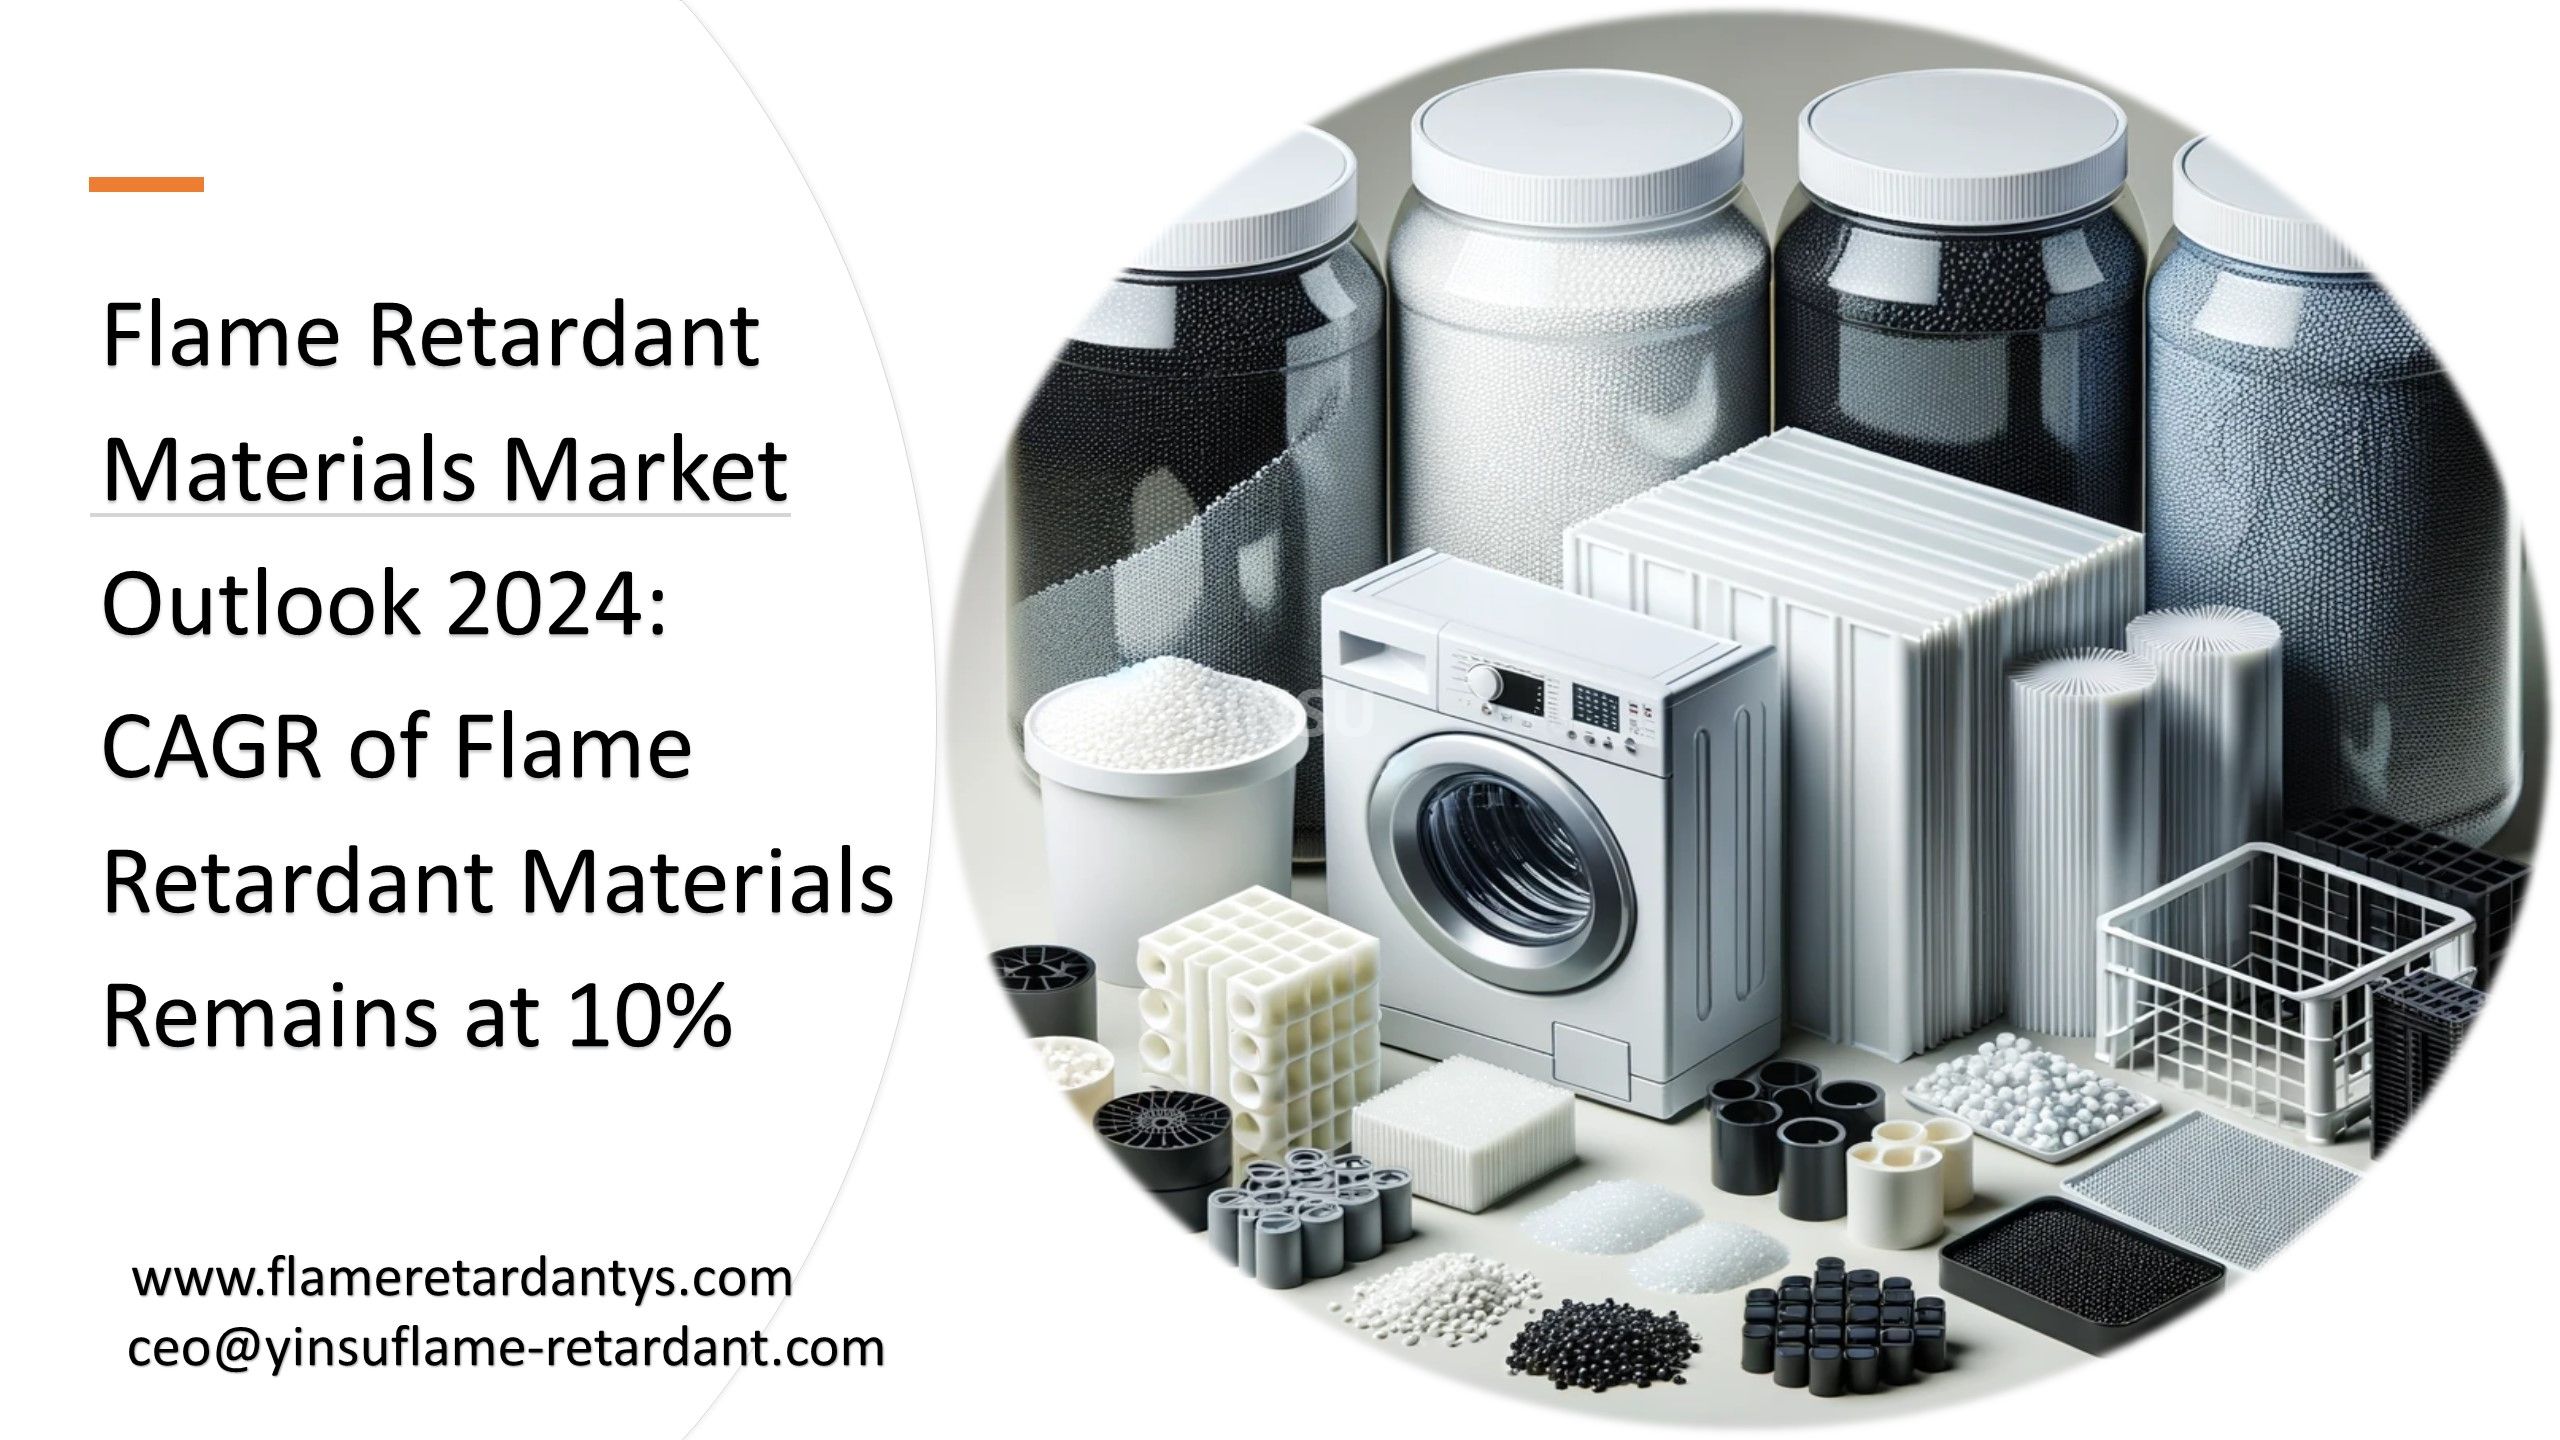 Flame Retardant Materials Market Outlook 2024